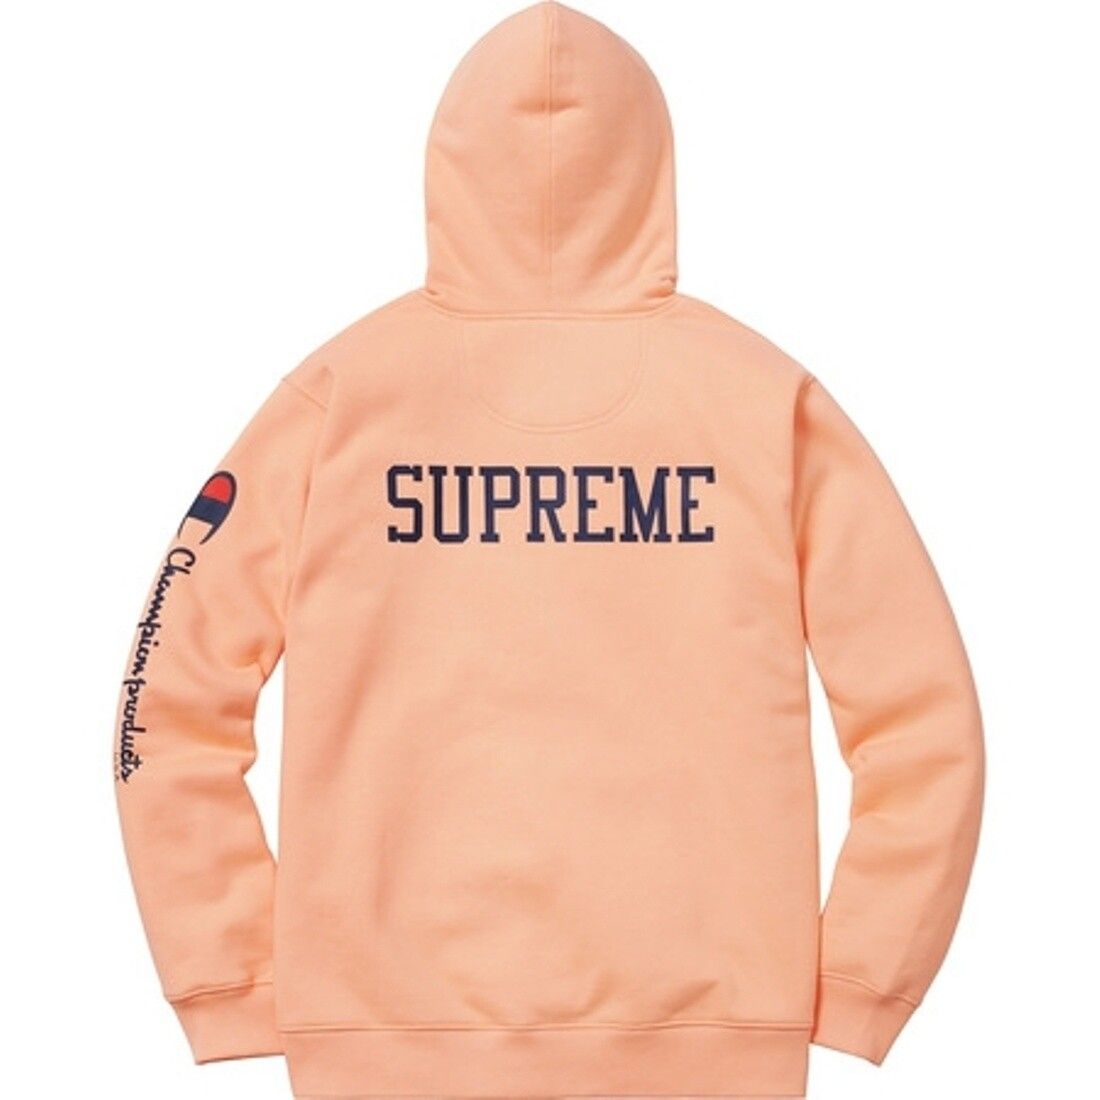 Supreme Supreme x Champion Hooded Sweatshirt in Peach Size US M / EU 48-50 / 2 - 2 Preview